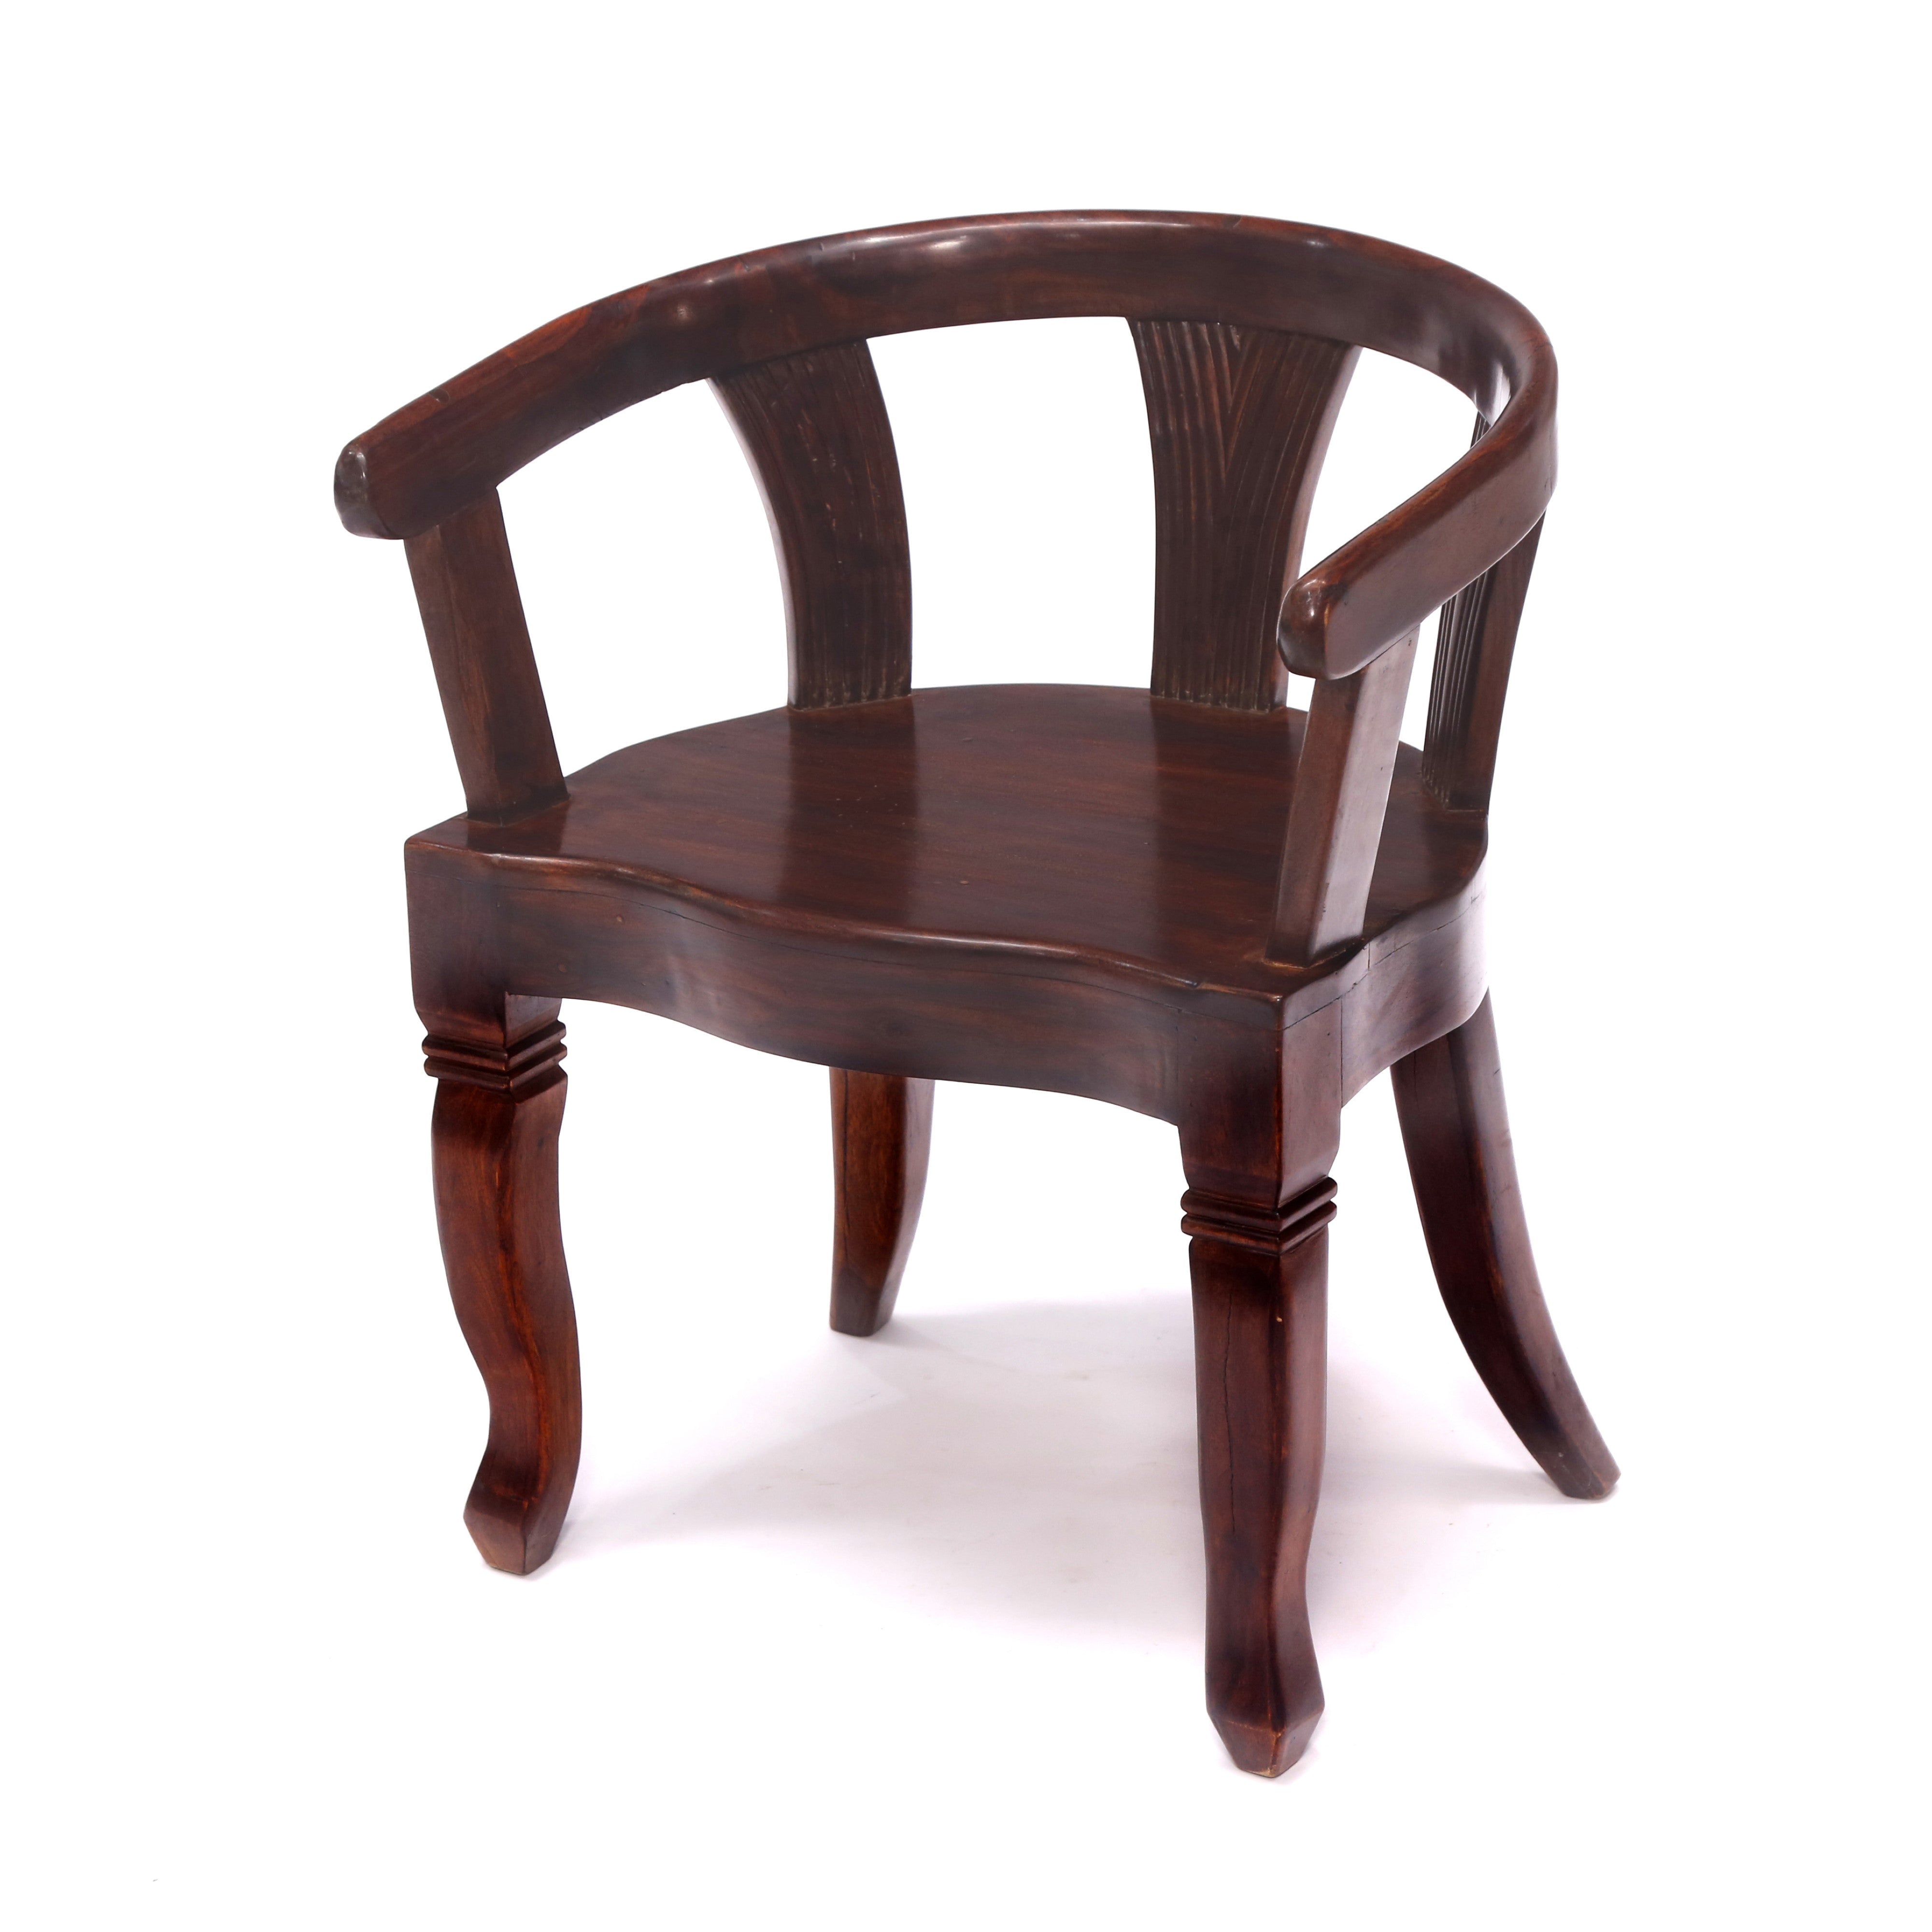 Dark Tone Rounded Arms Sheesham Wood Chair Arm Chair